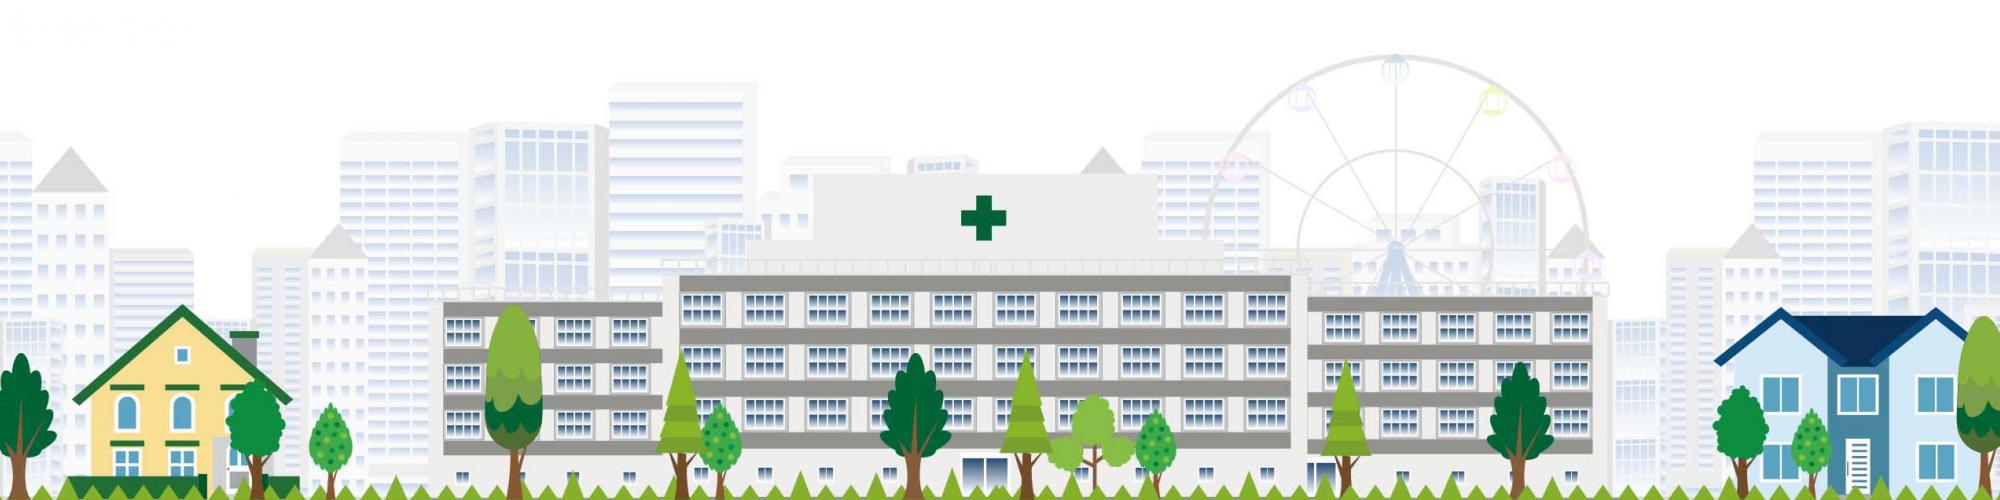 Sankt Gertrauden-Krankenhaus GmbH